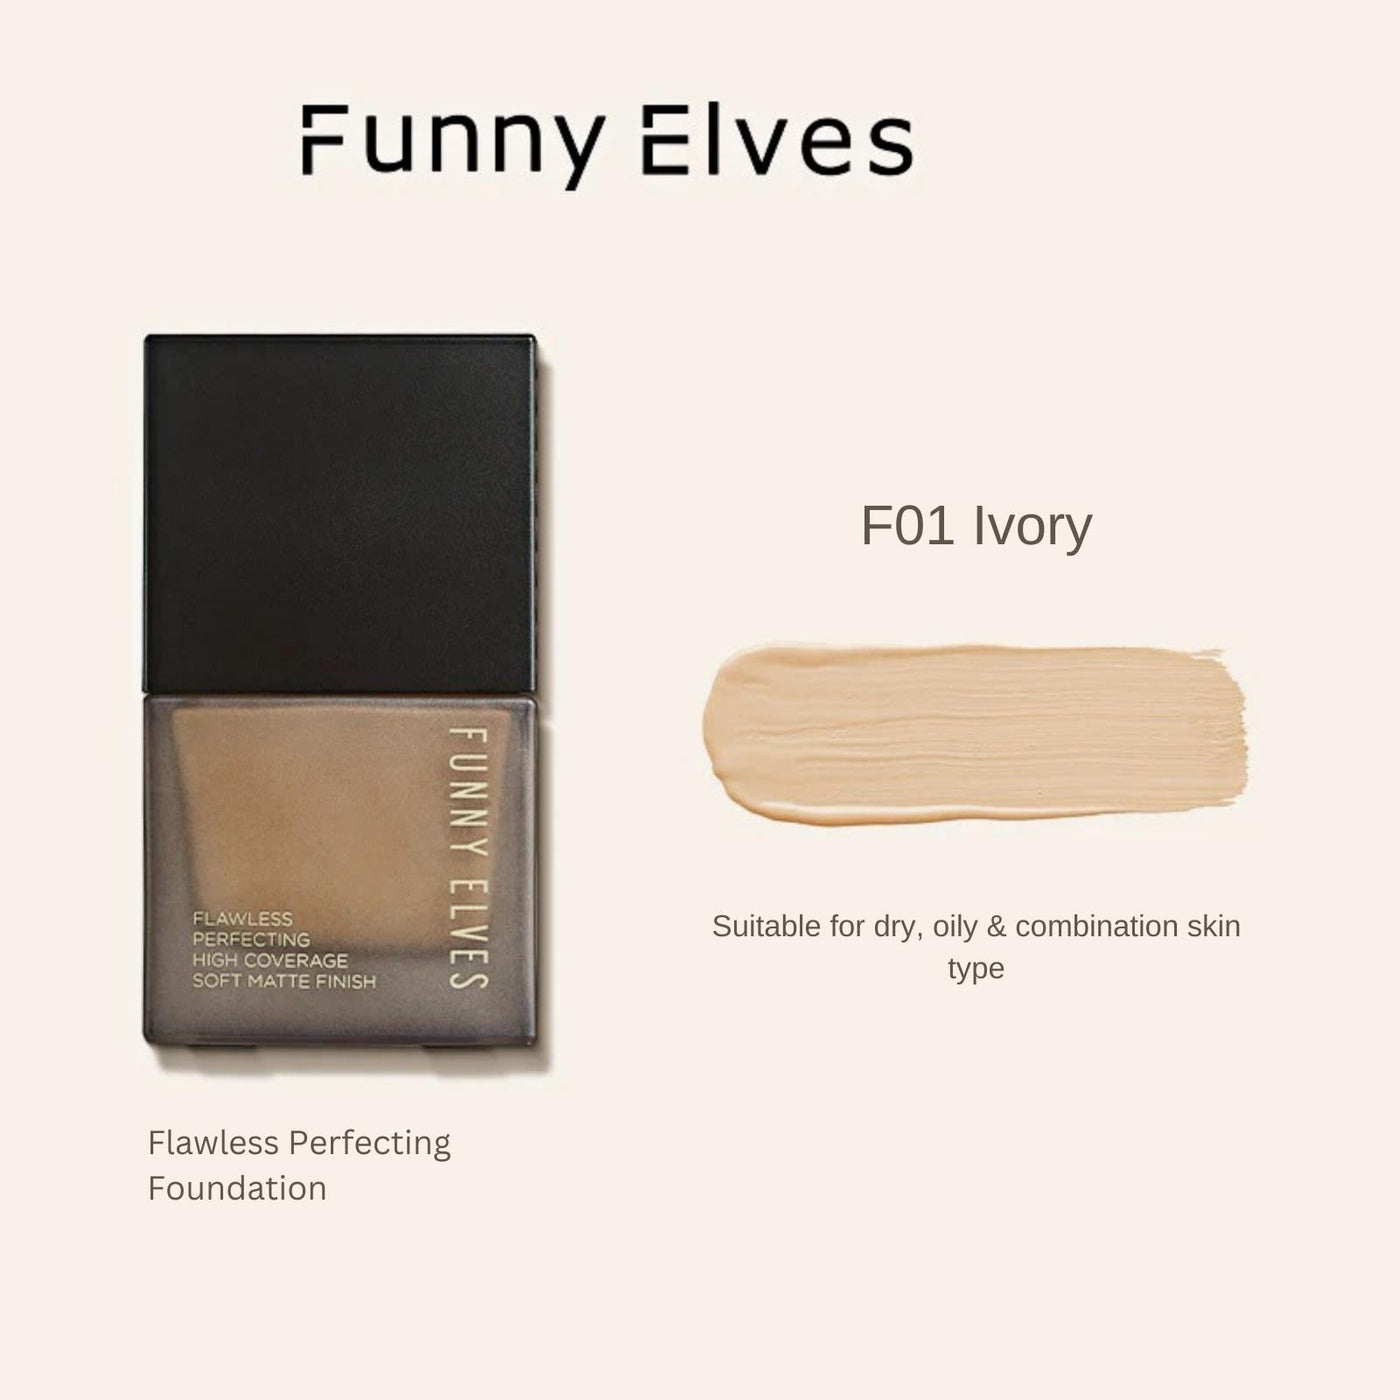 FUNNY ELVES Foundation